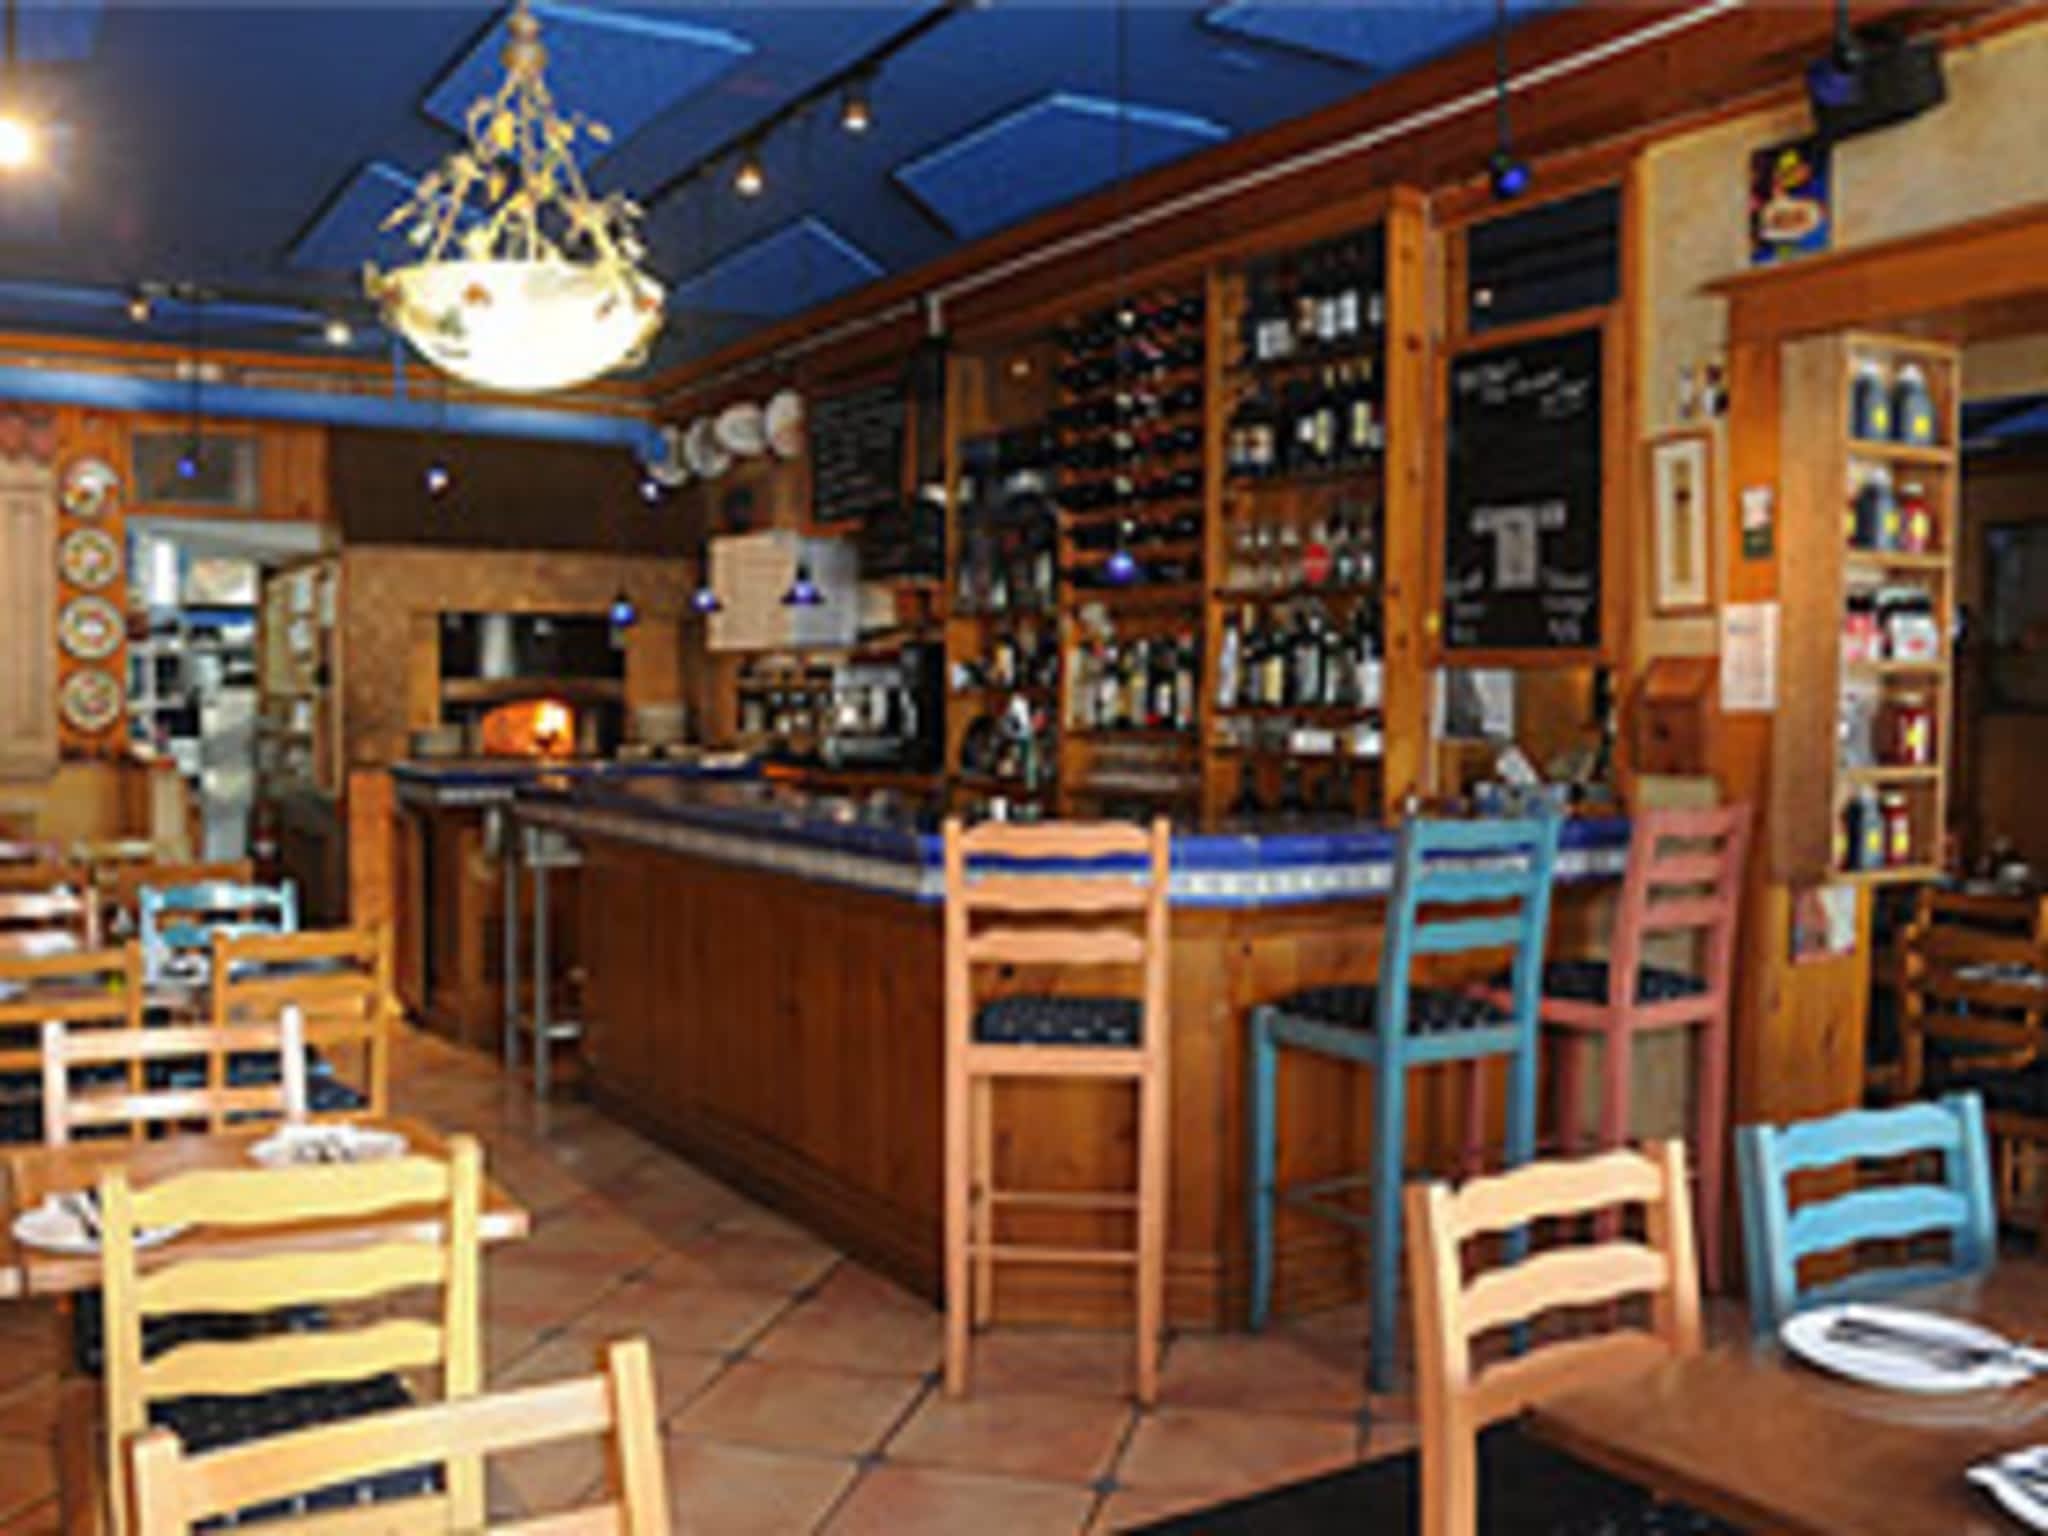 photo Ferraro Restaurant